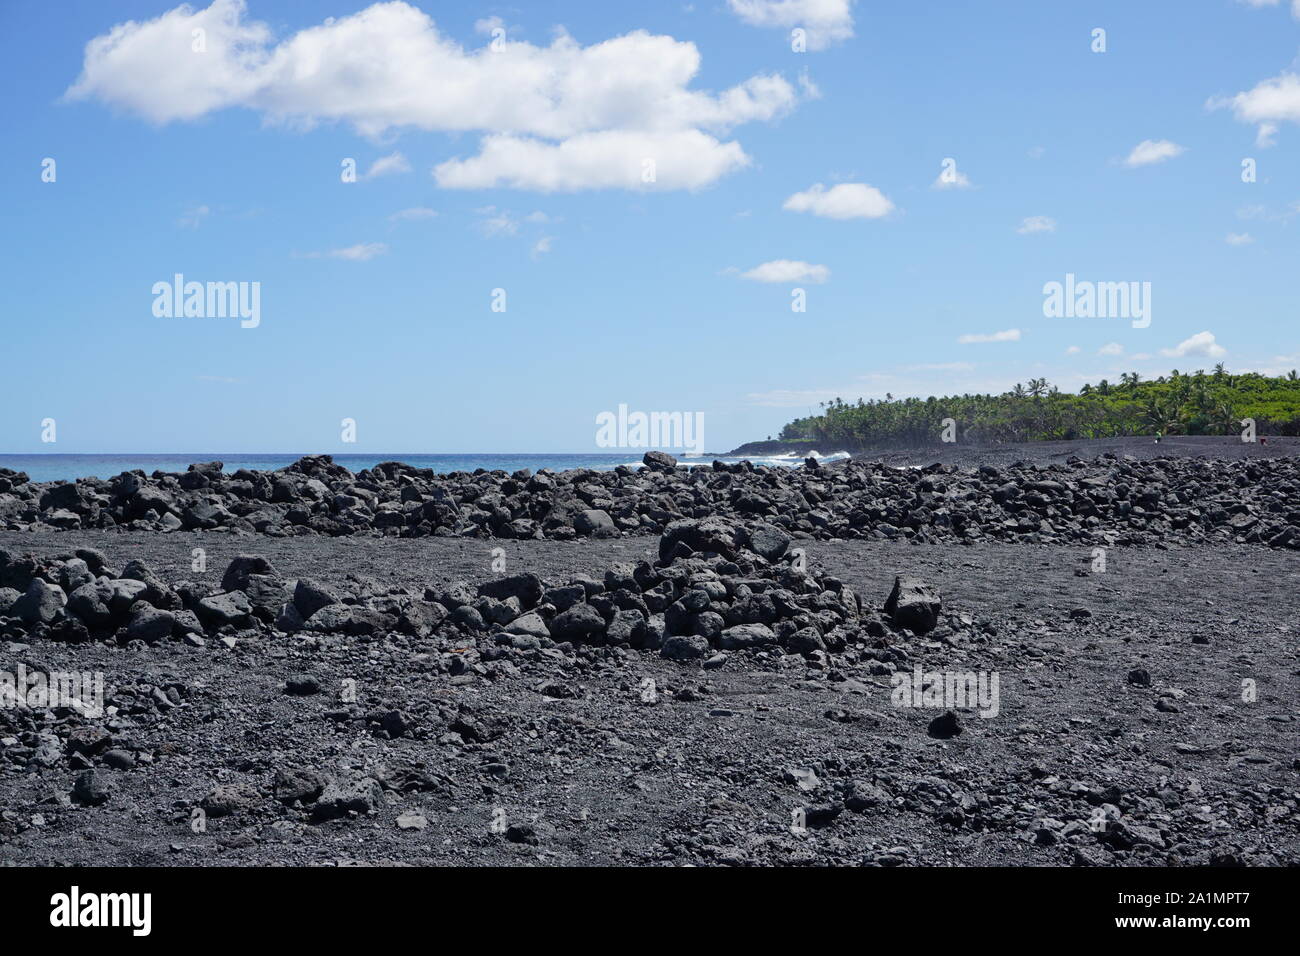 Pohoiki Black Sand Beach in Isaac Hale Beach Park in Hawaii - Hawaii's newest beach, created by the 2018 eruptions of Kilauea. Stock Photo